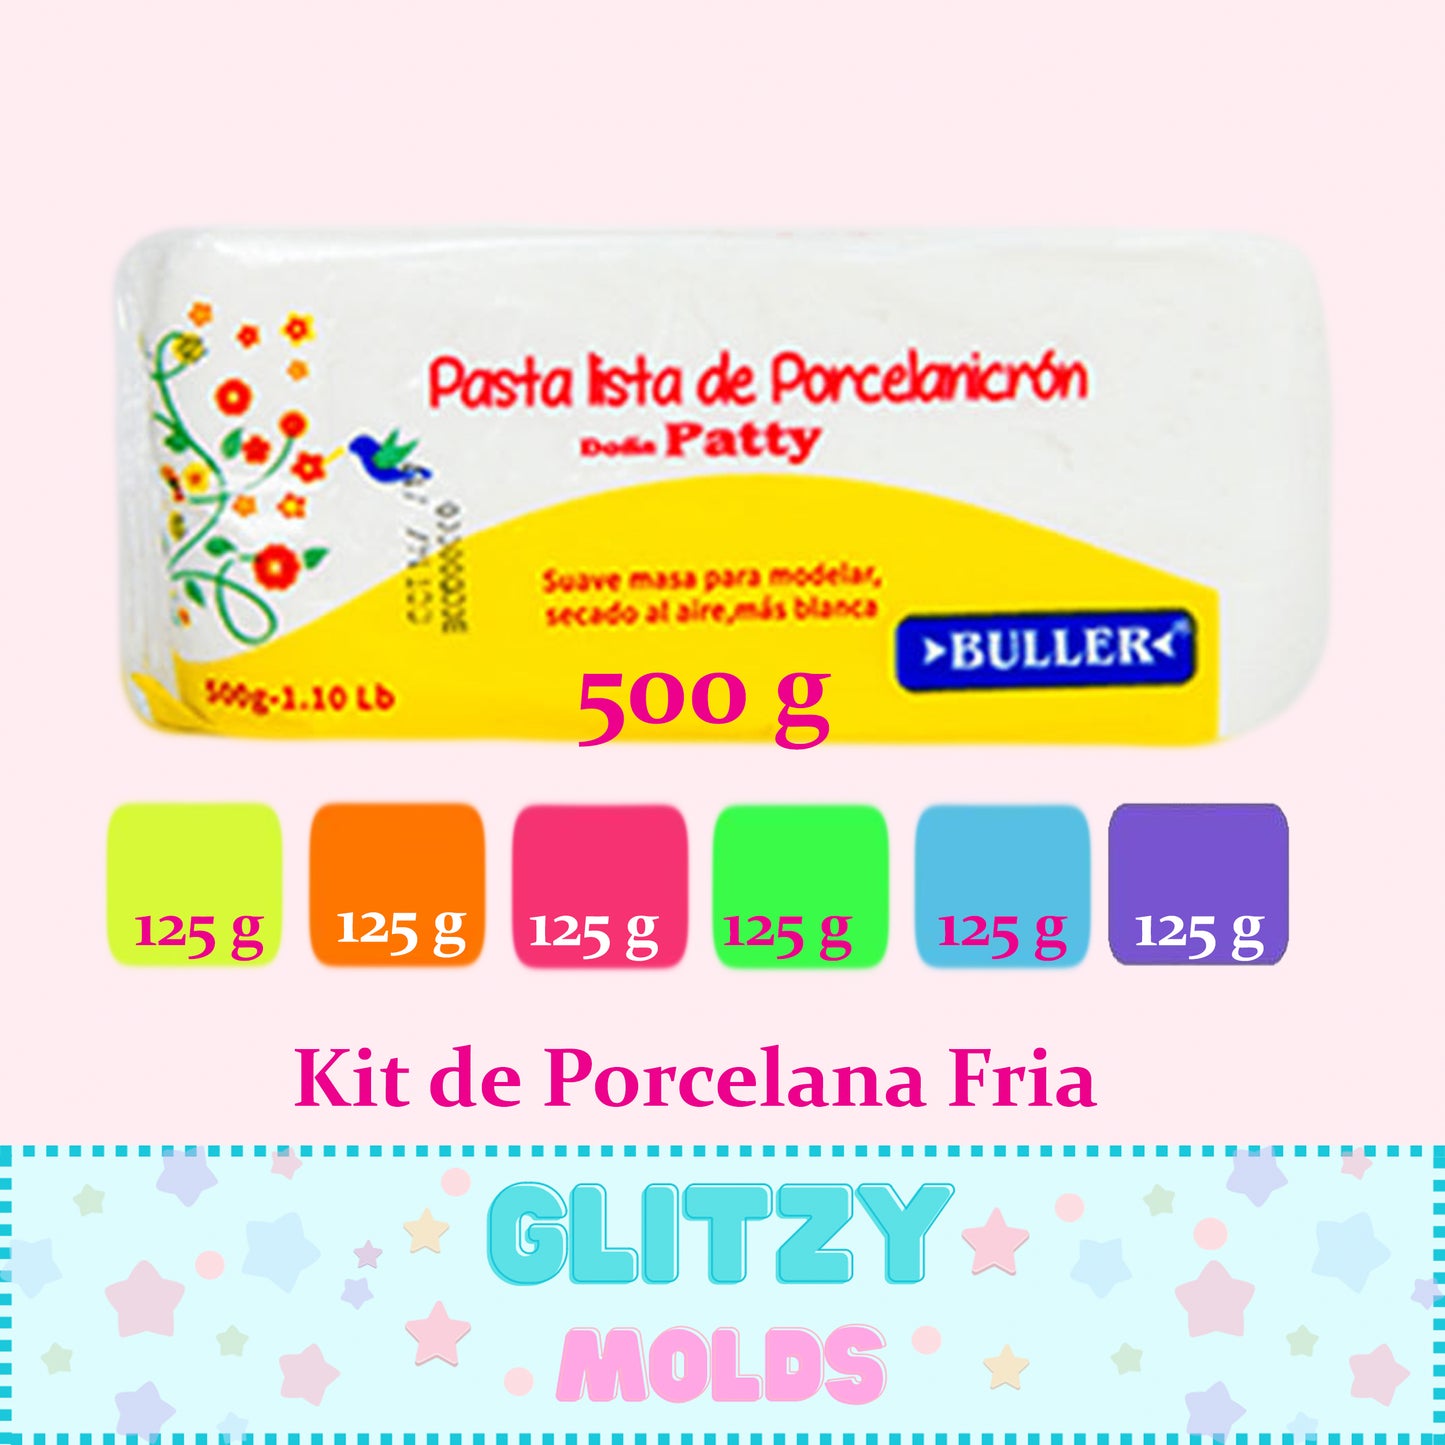 Cold Porcelain Kit, 2.75 Lbs Air Dry Clay, Porcelana Fria Buller, Kit de Porcelana Fria, 1250 gramos